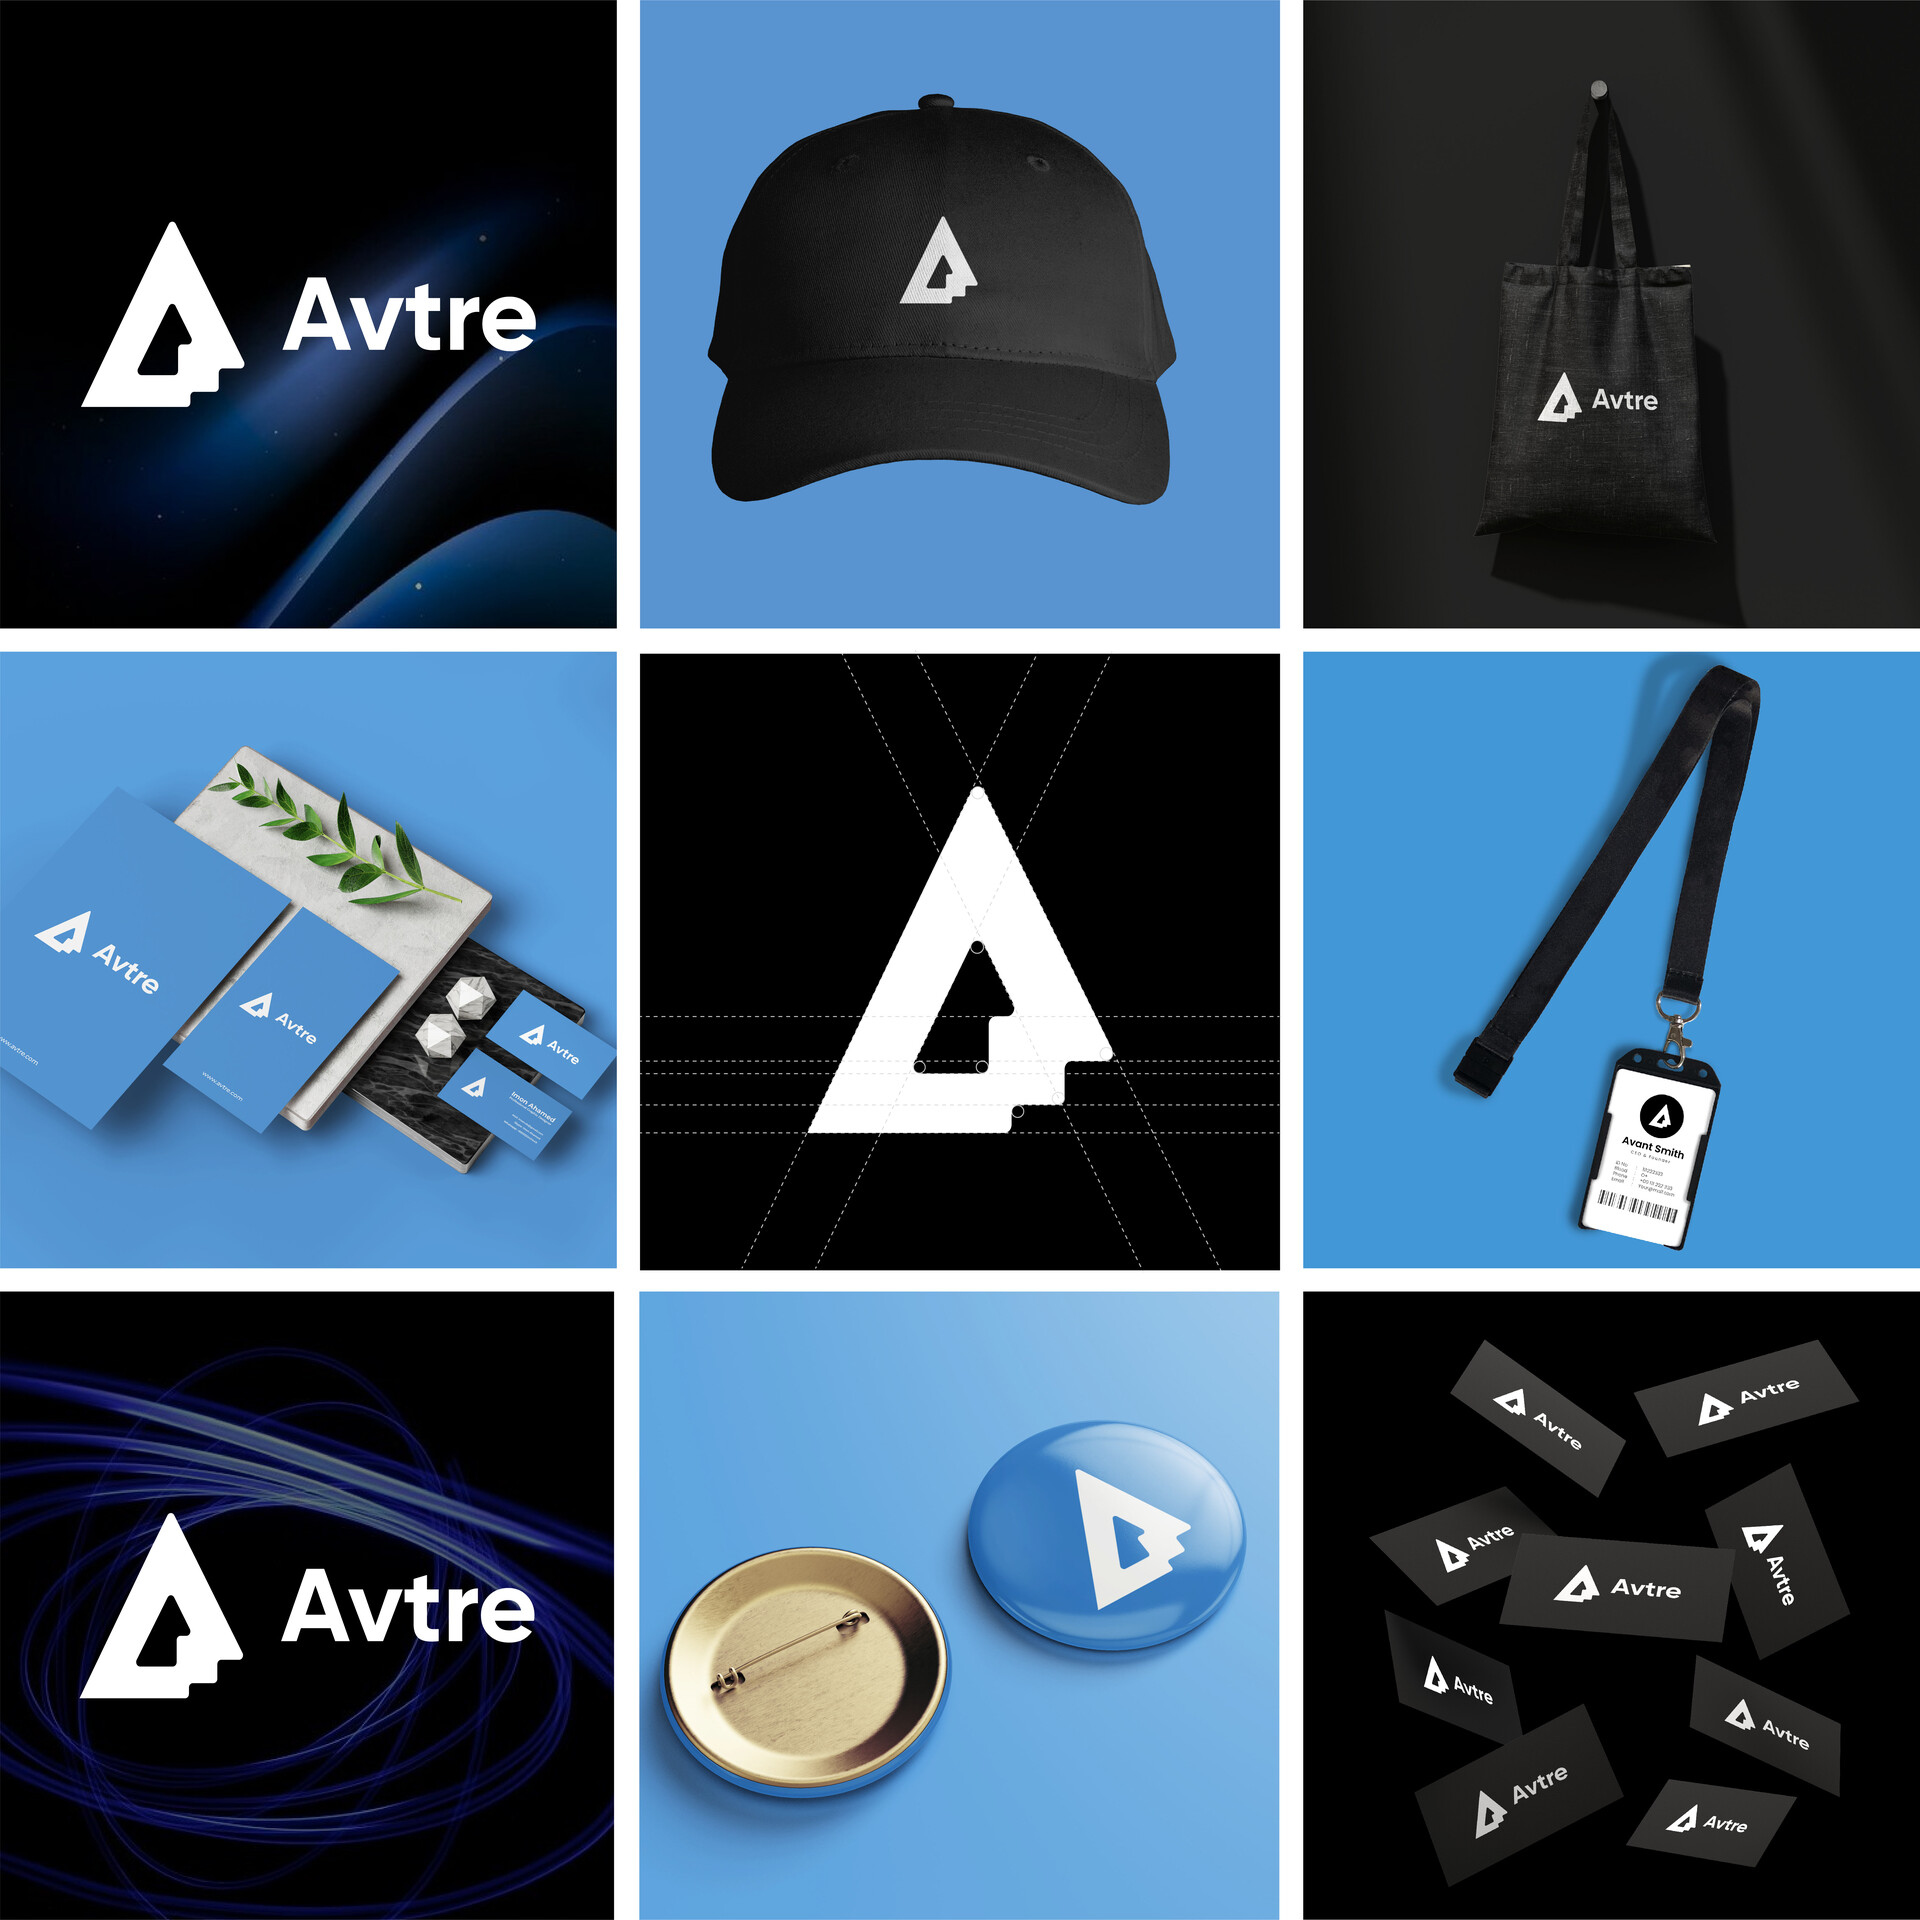 ArtStation - Letter A logo Design